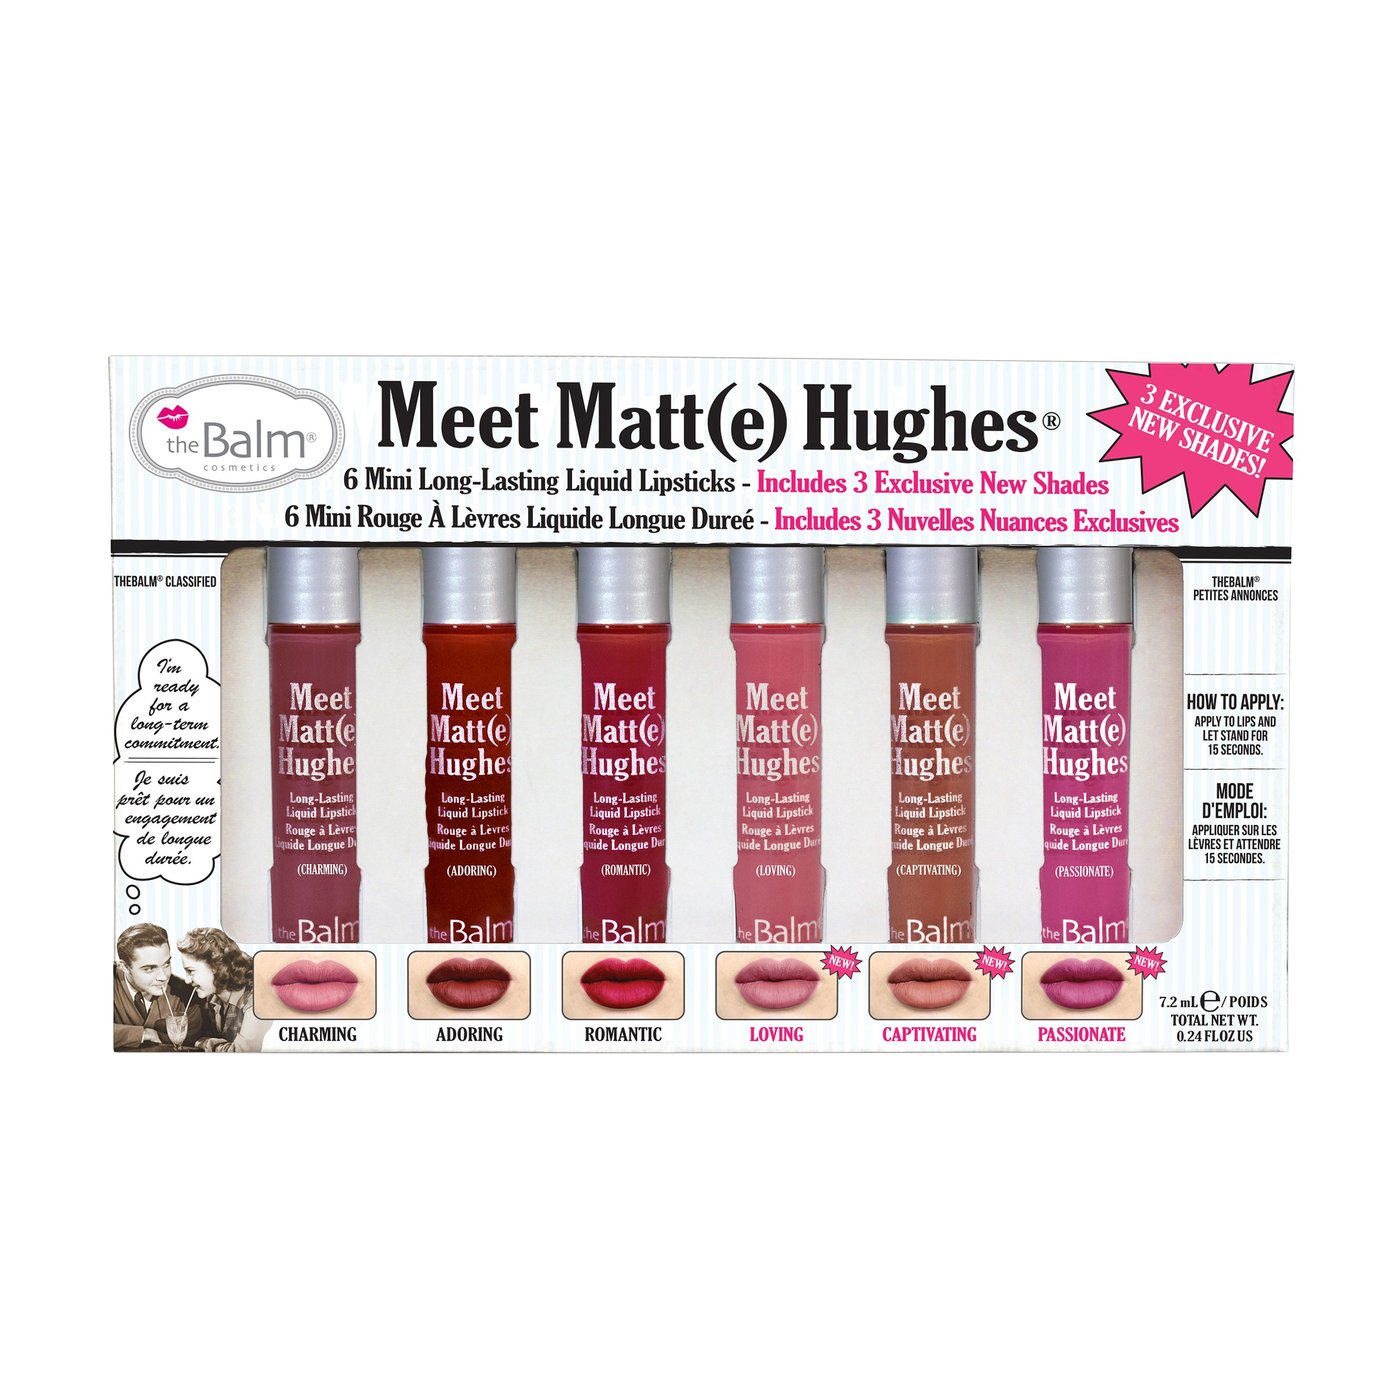 The Balm Meet Matte Hughes Lipsticks Volume.3 (Passionate)